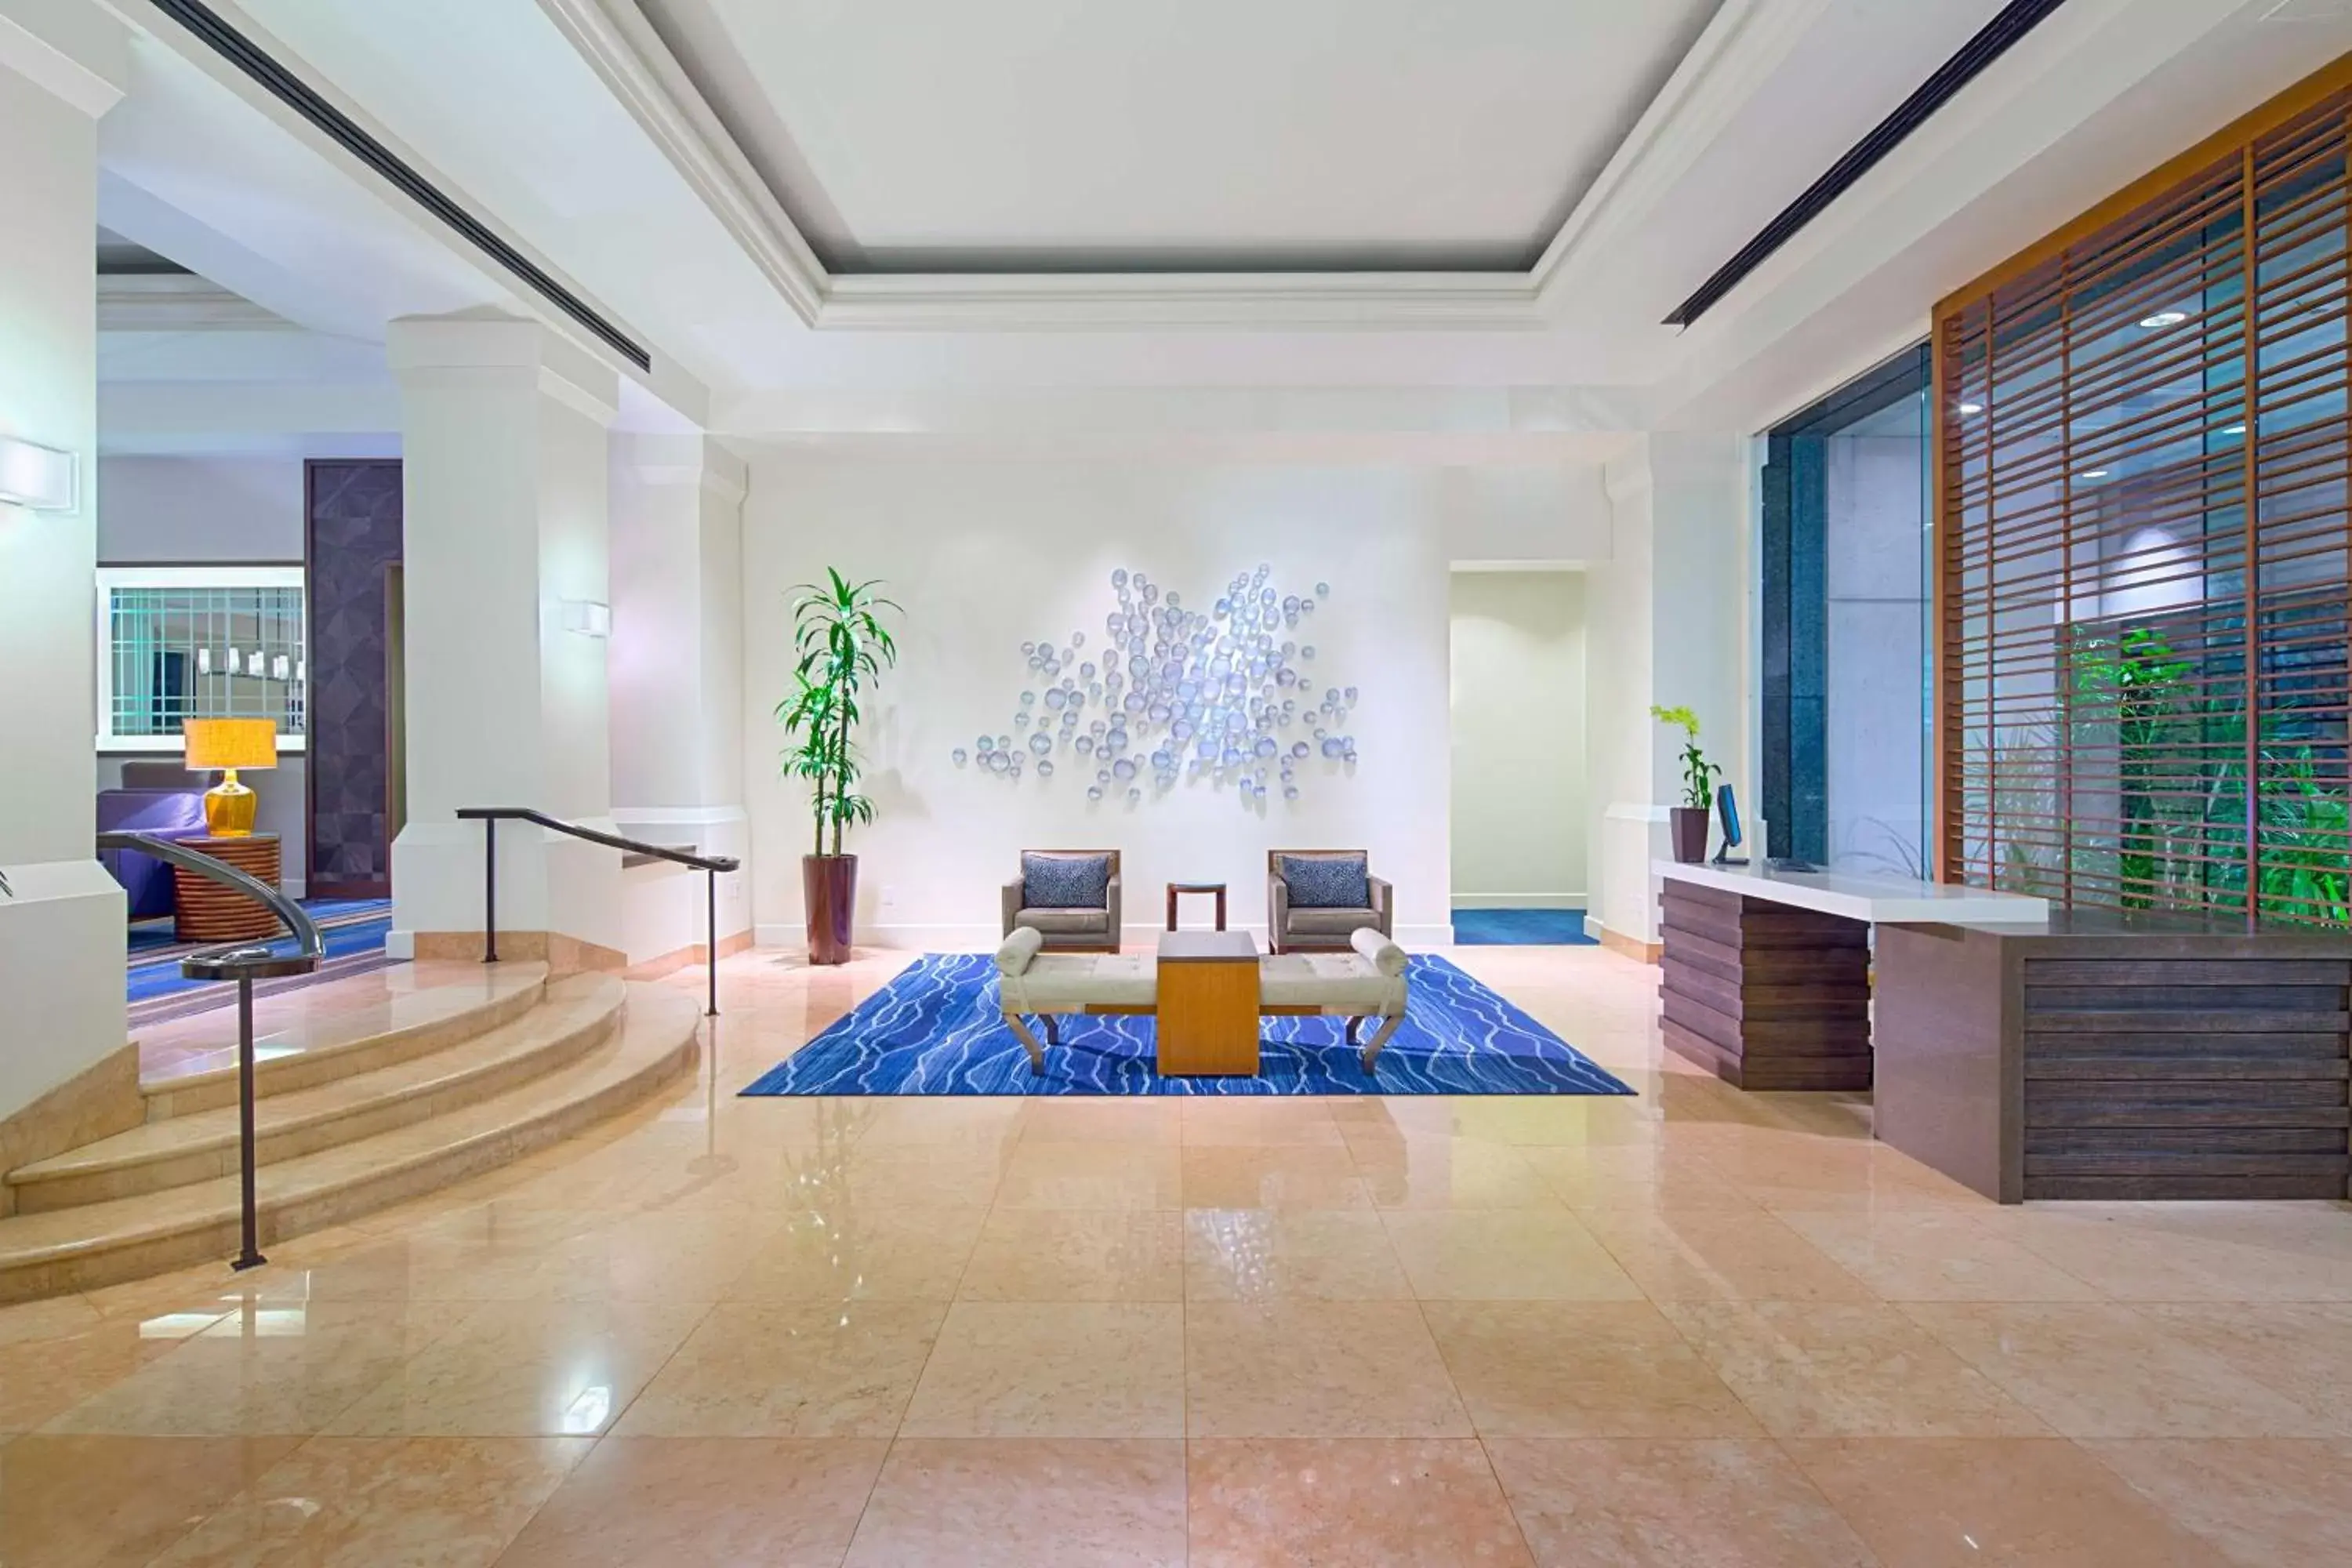 Lobby or reception in Grand Hyatt Tampa Bay